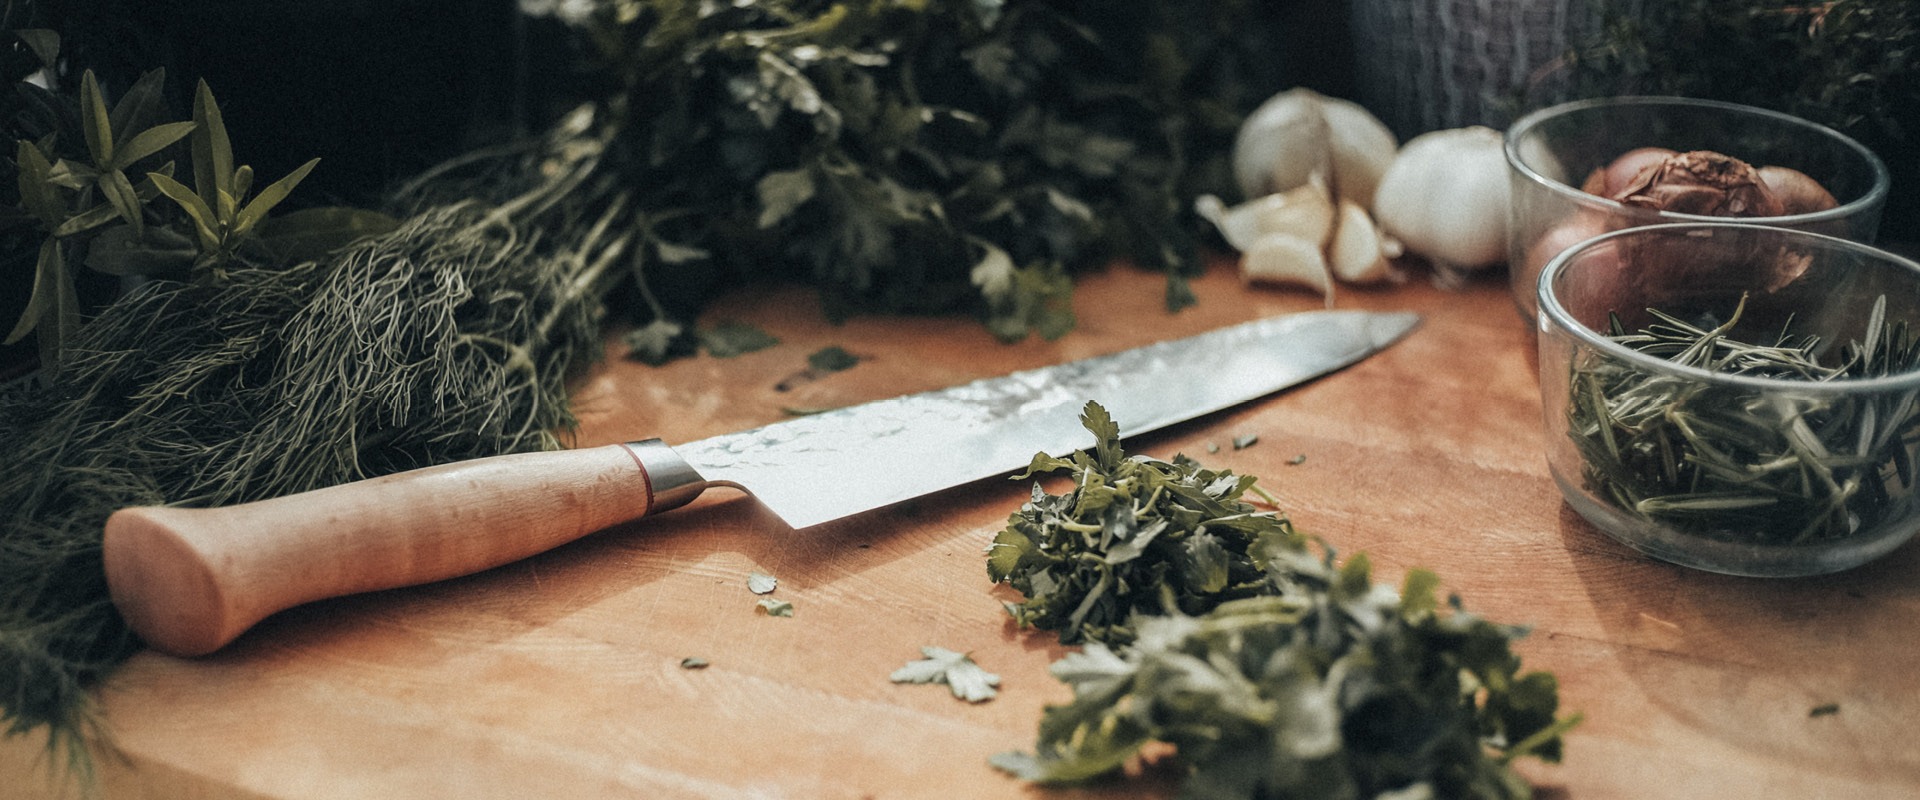 A knife and herbs on an Eggenhof cutting board.